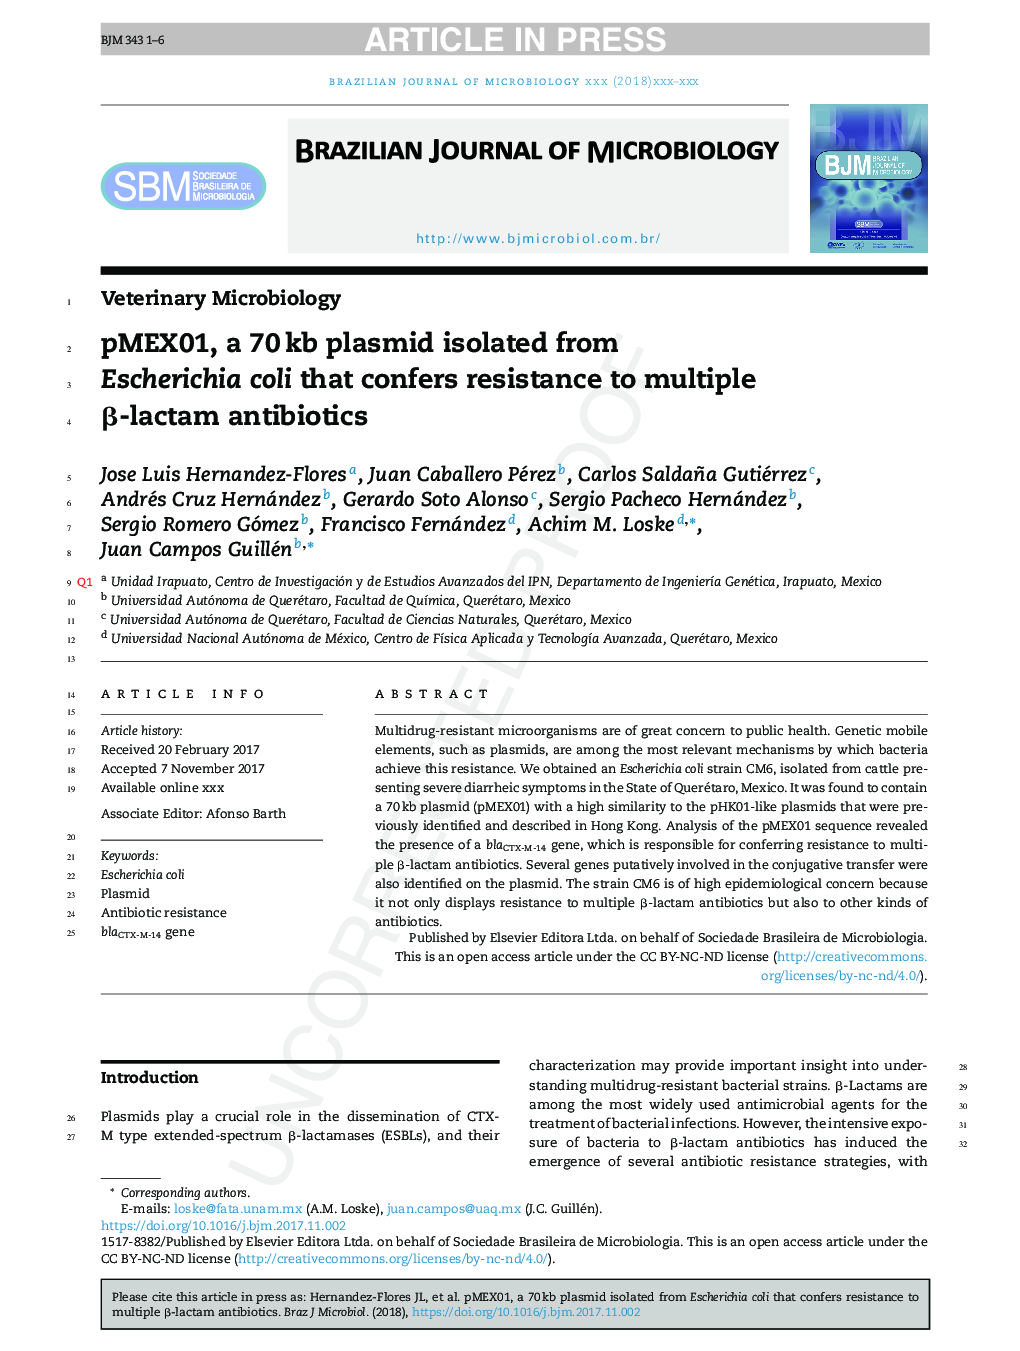 pMEX01, a 70Â kb plasmid isolated from Escherichia coli that confers resistance to multiple Î²-lactam antibiotics